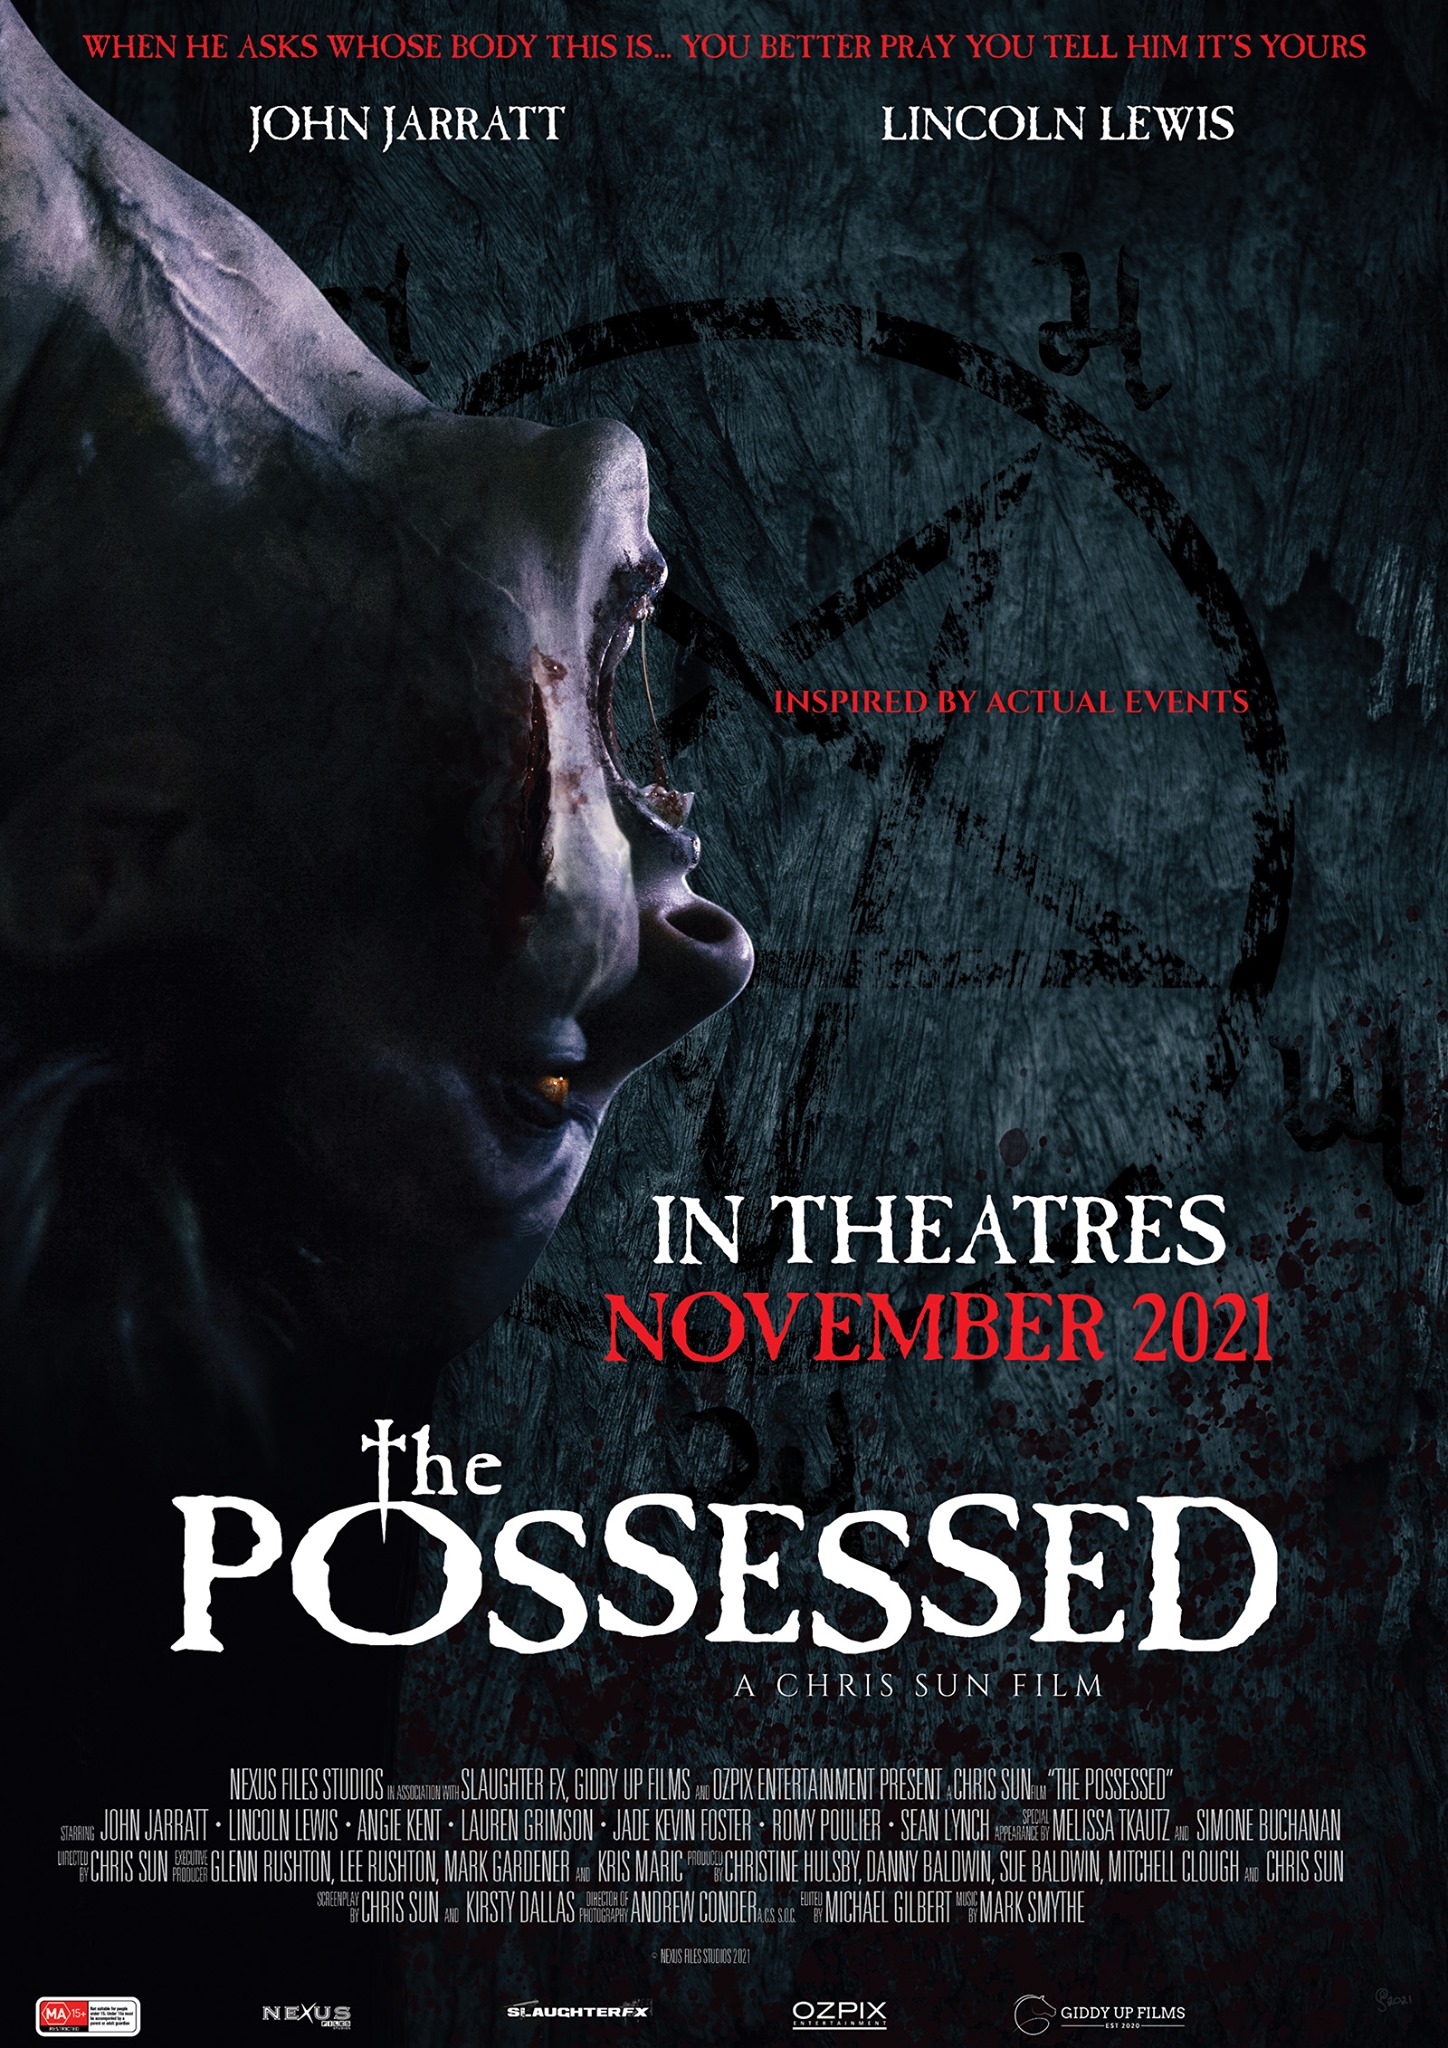 [NEWS] Il trailer dell’horror demoniaco The Possessed